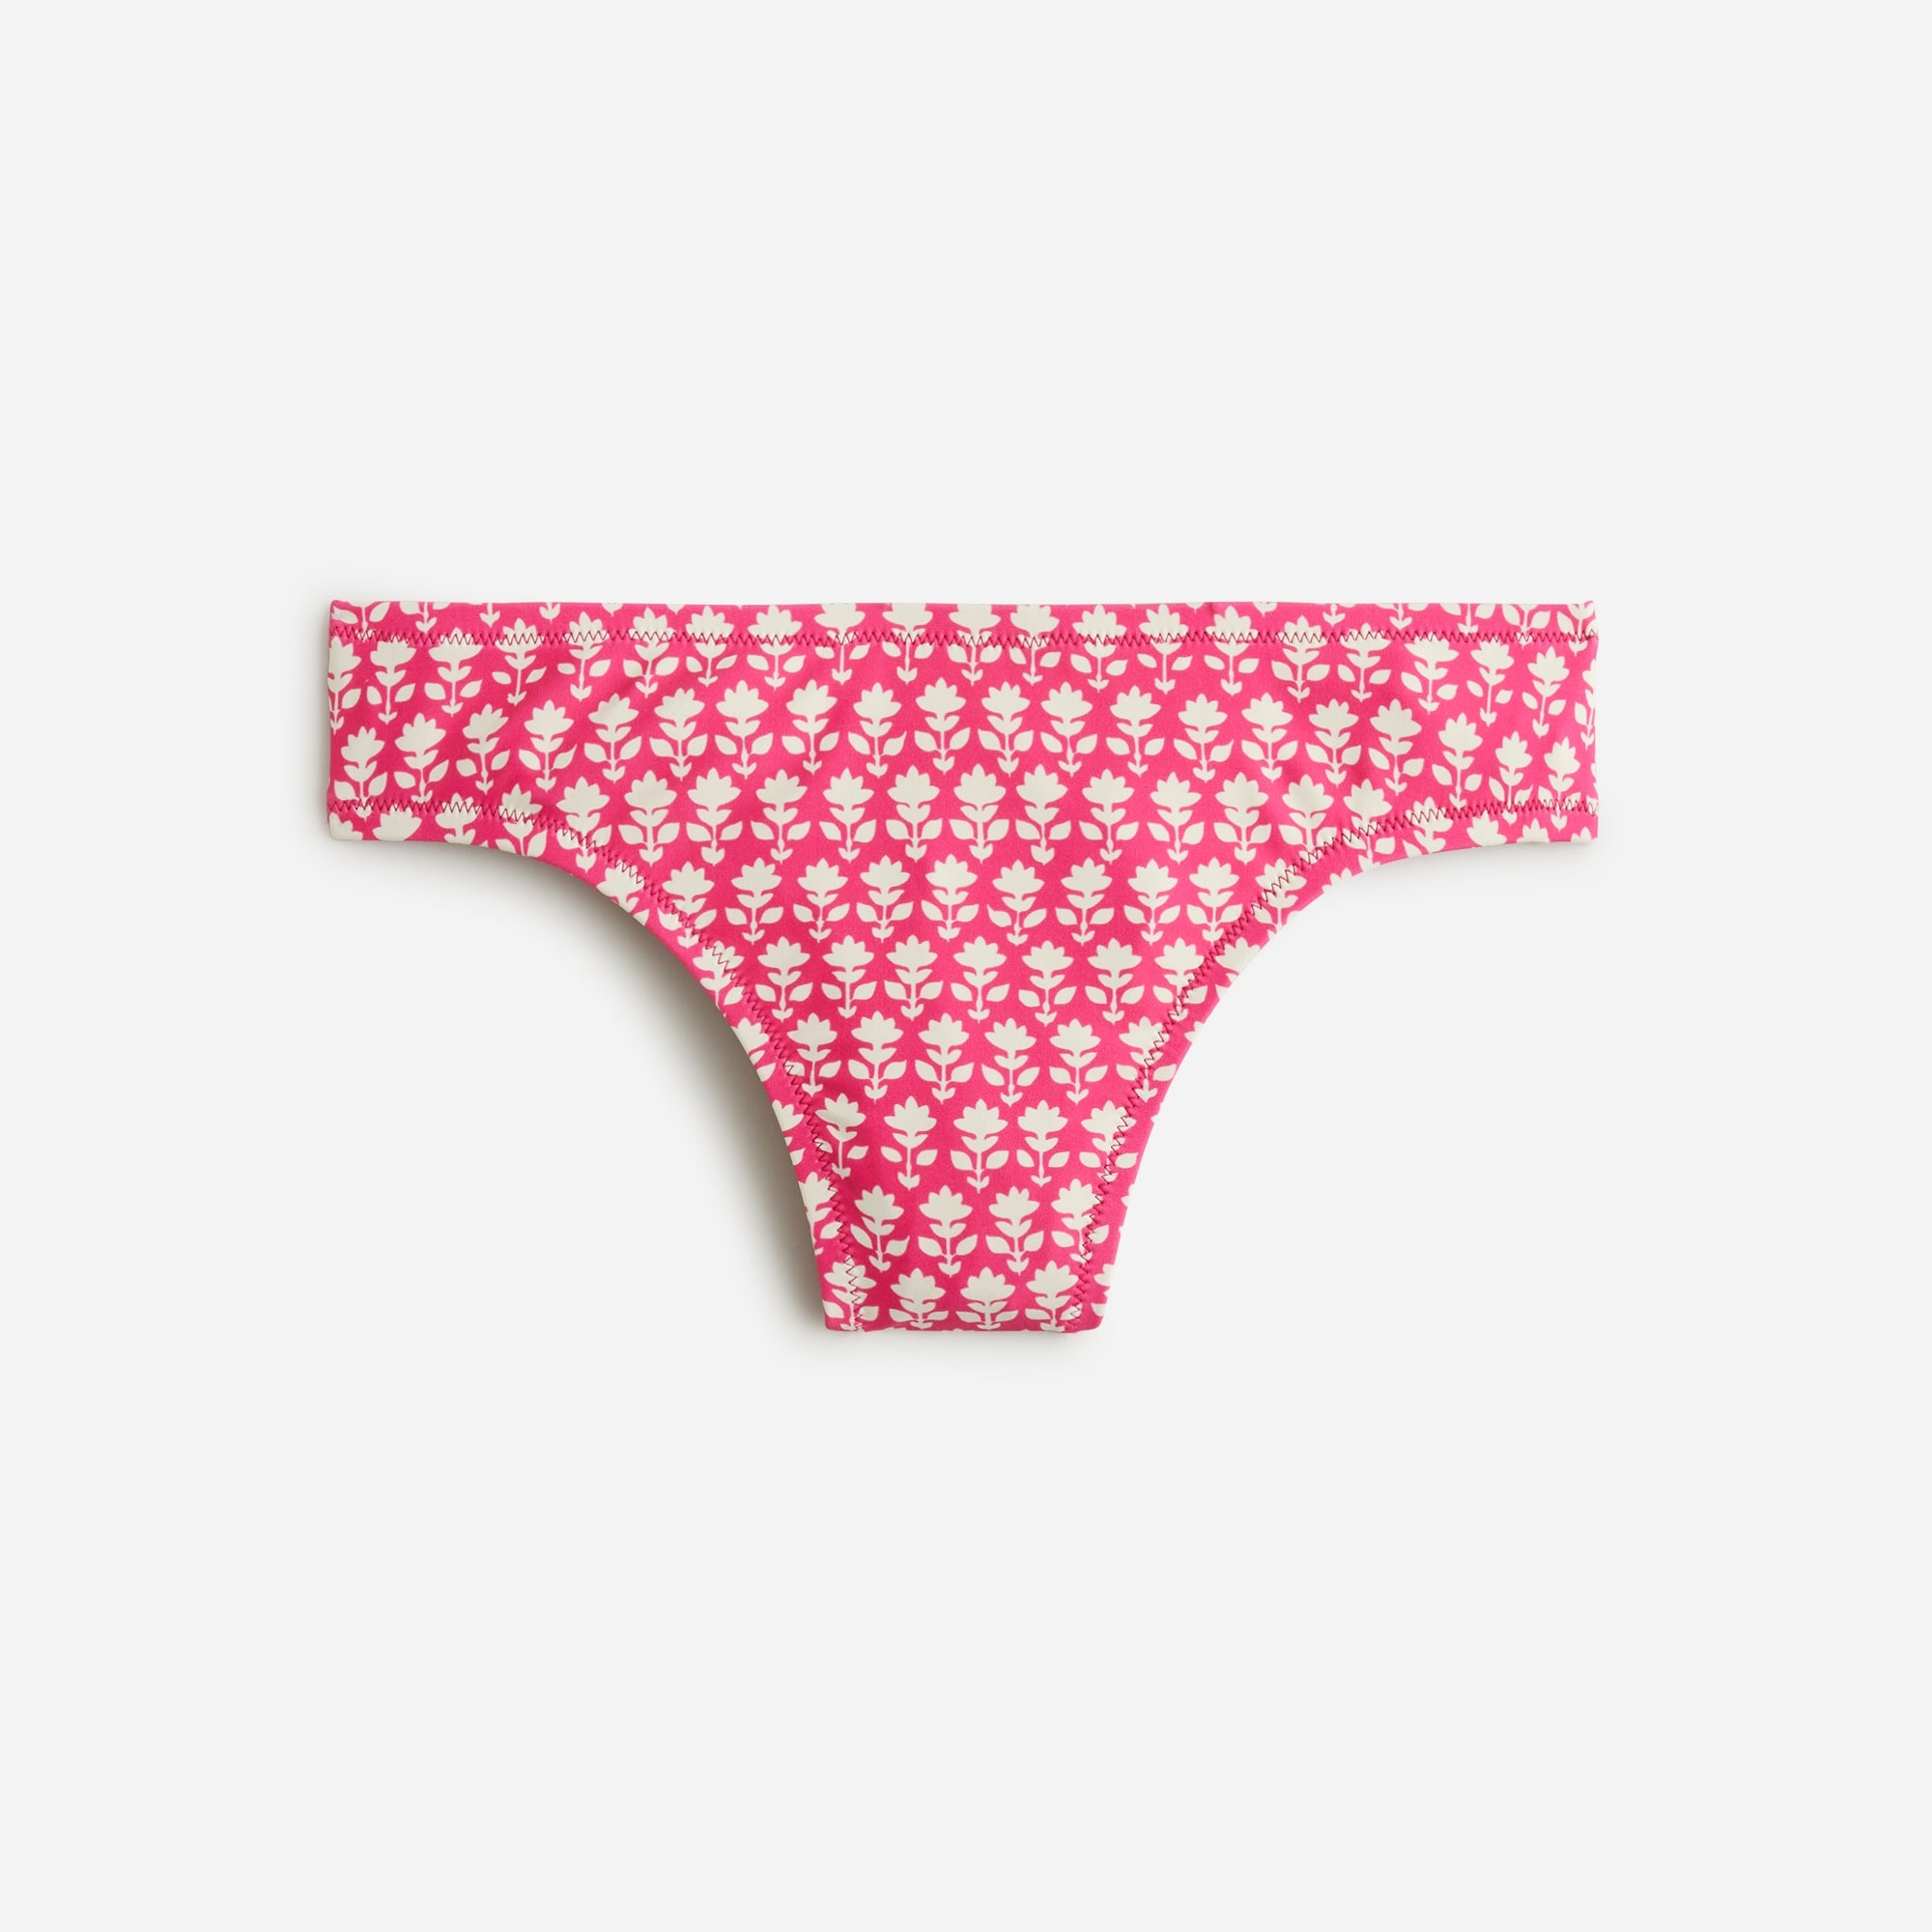  Classic full-coverage bikini bottom in pink stamp floral